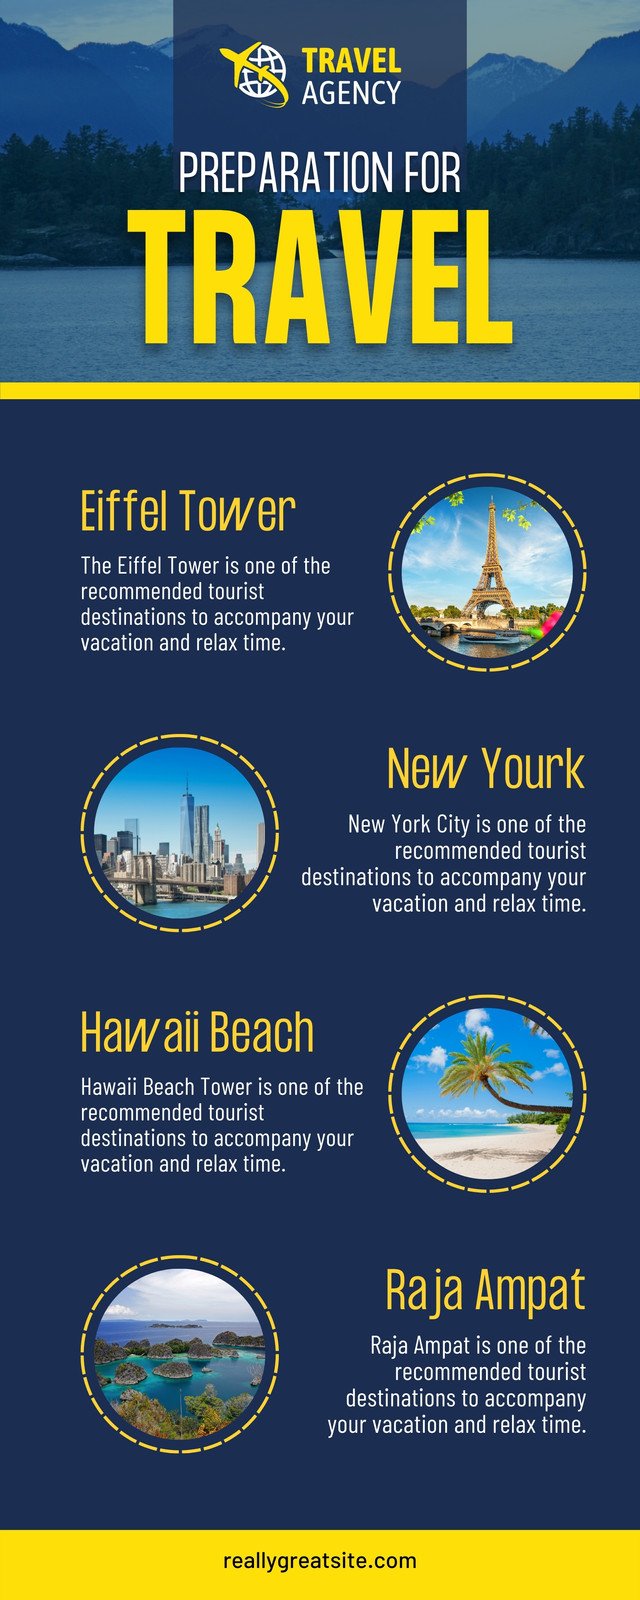 travel info in